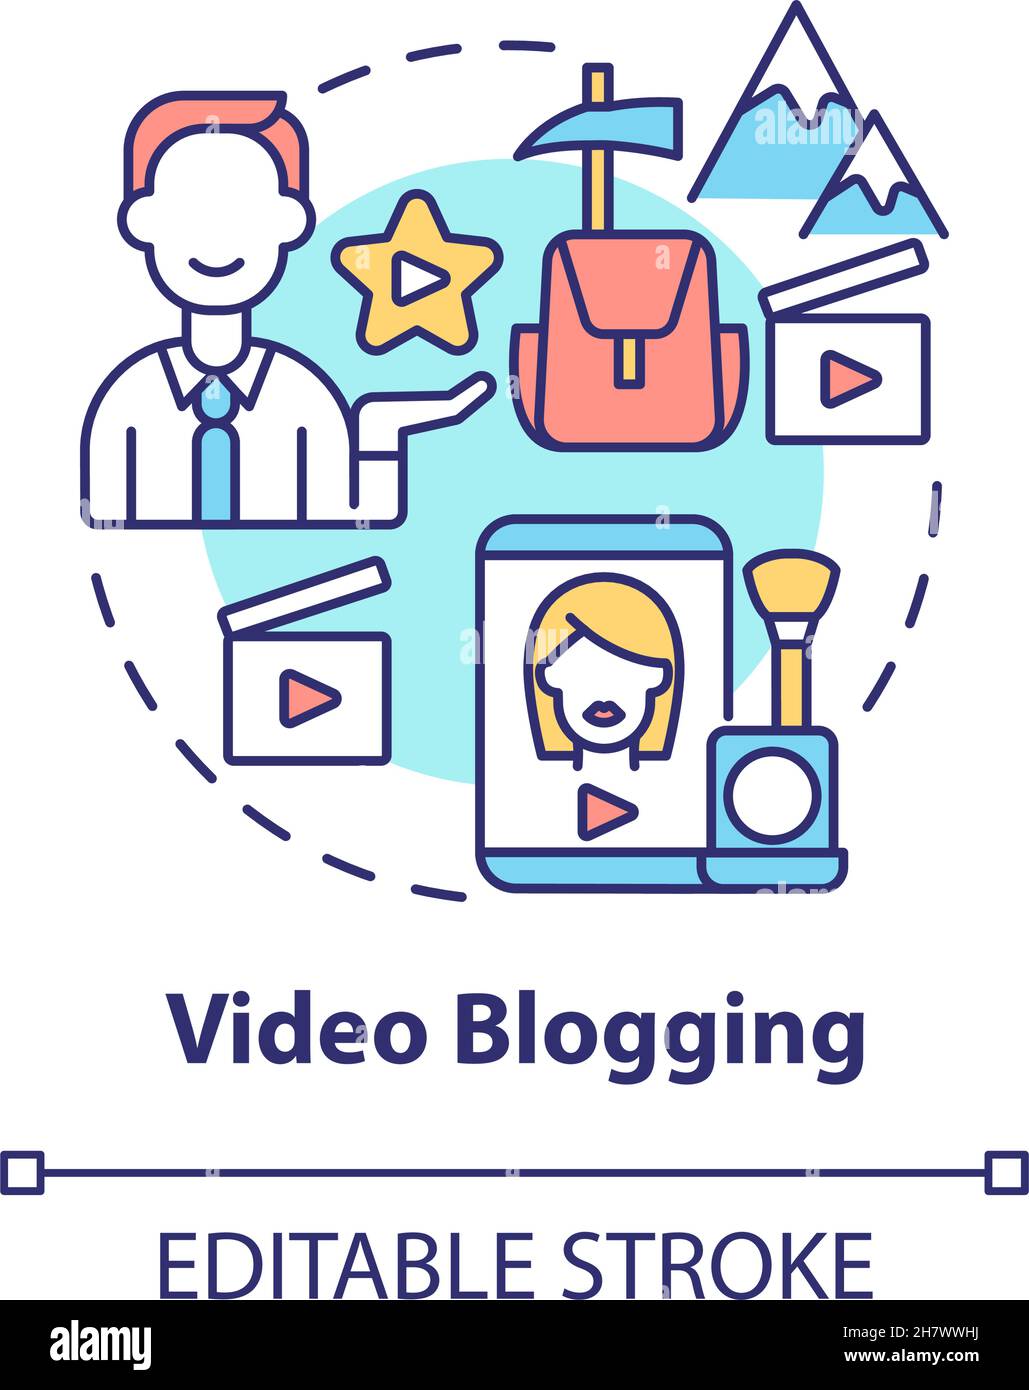 Video blogging concept icon Stock Vector